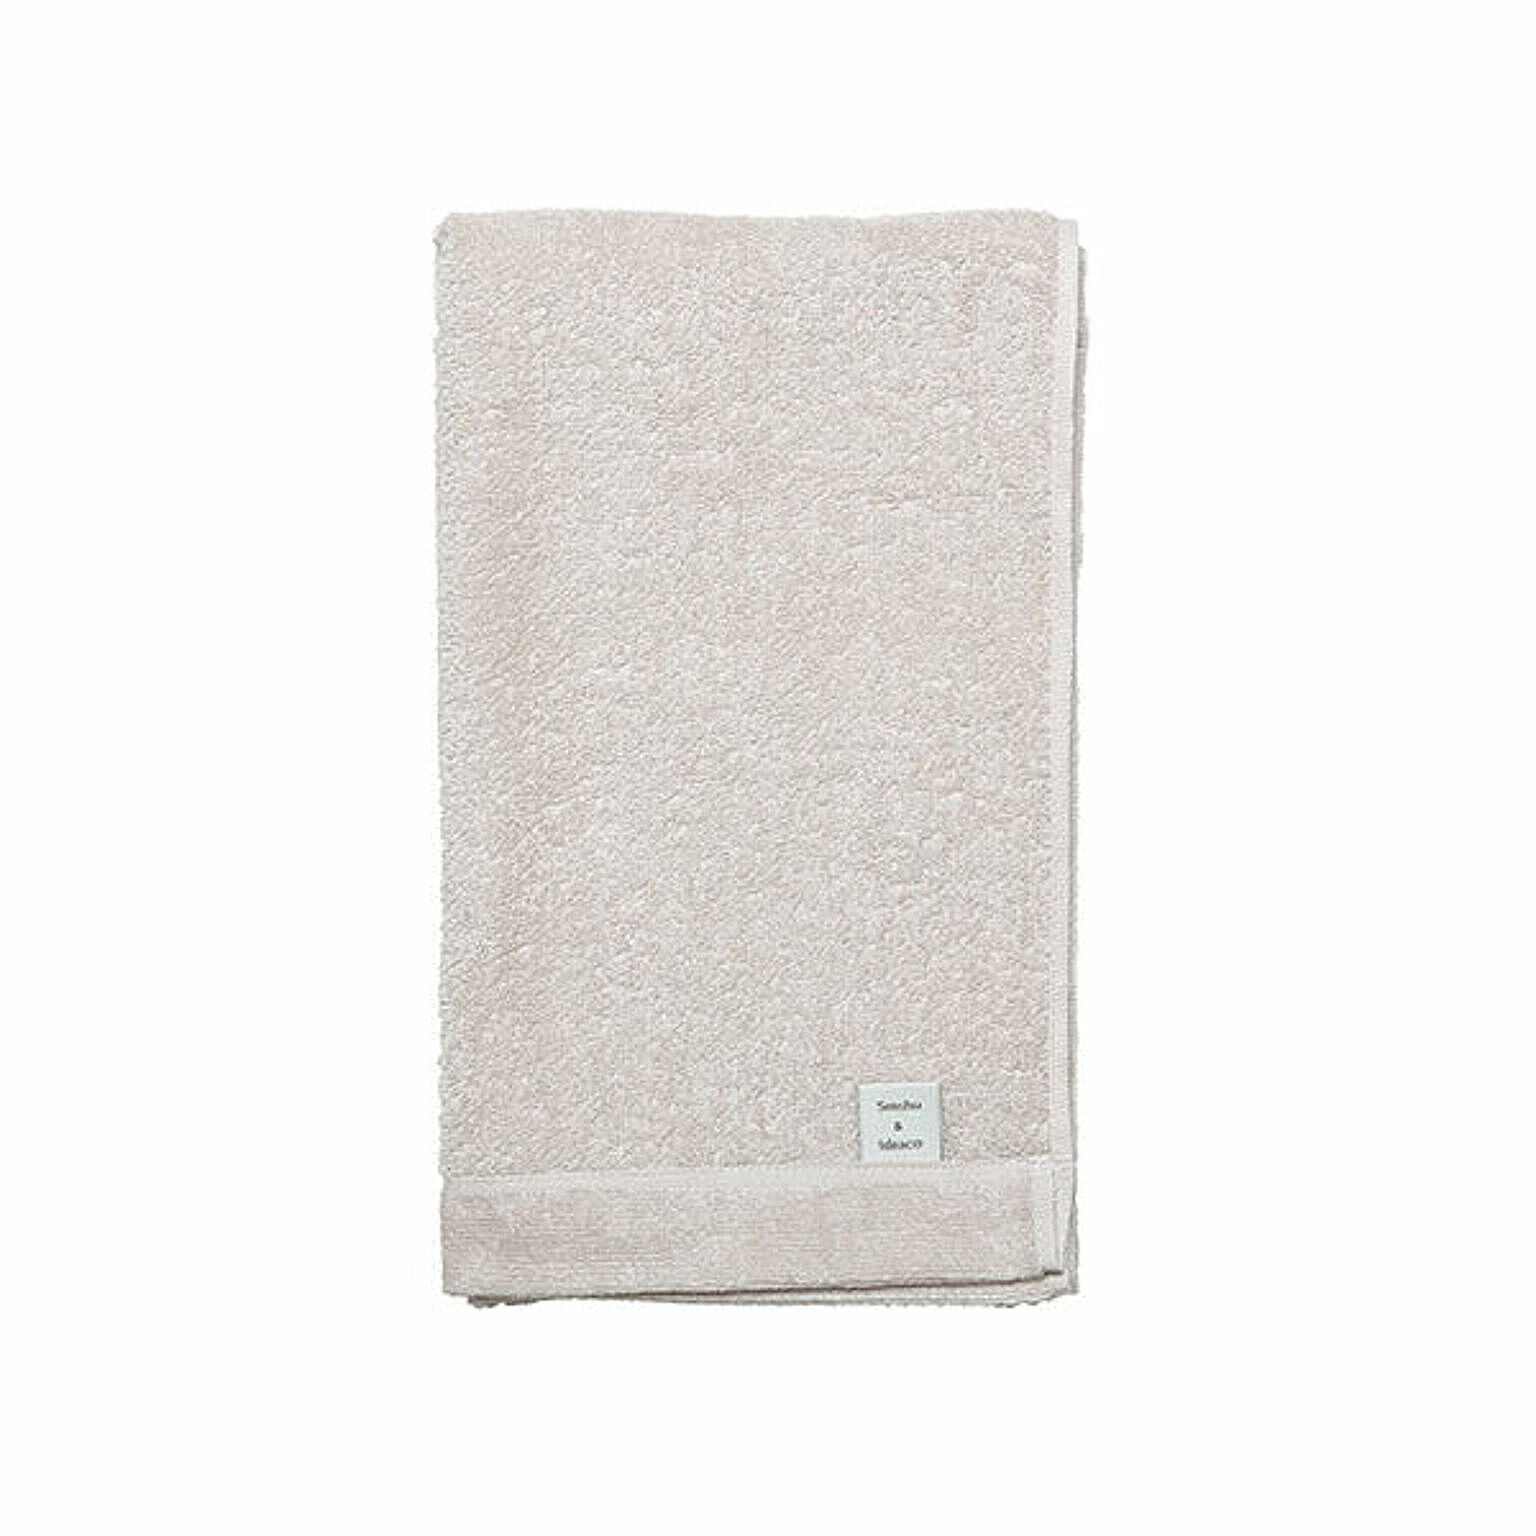 organic cotton towel / face イデアコ オーガニック コットン タオル / フェイス 泉州タオル/日本製